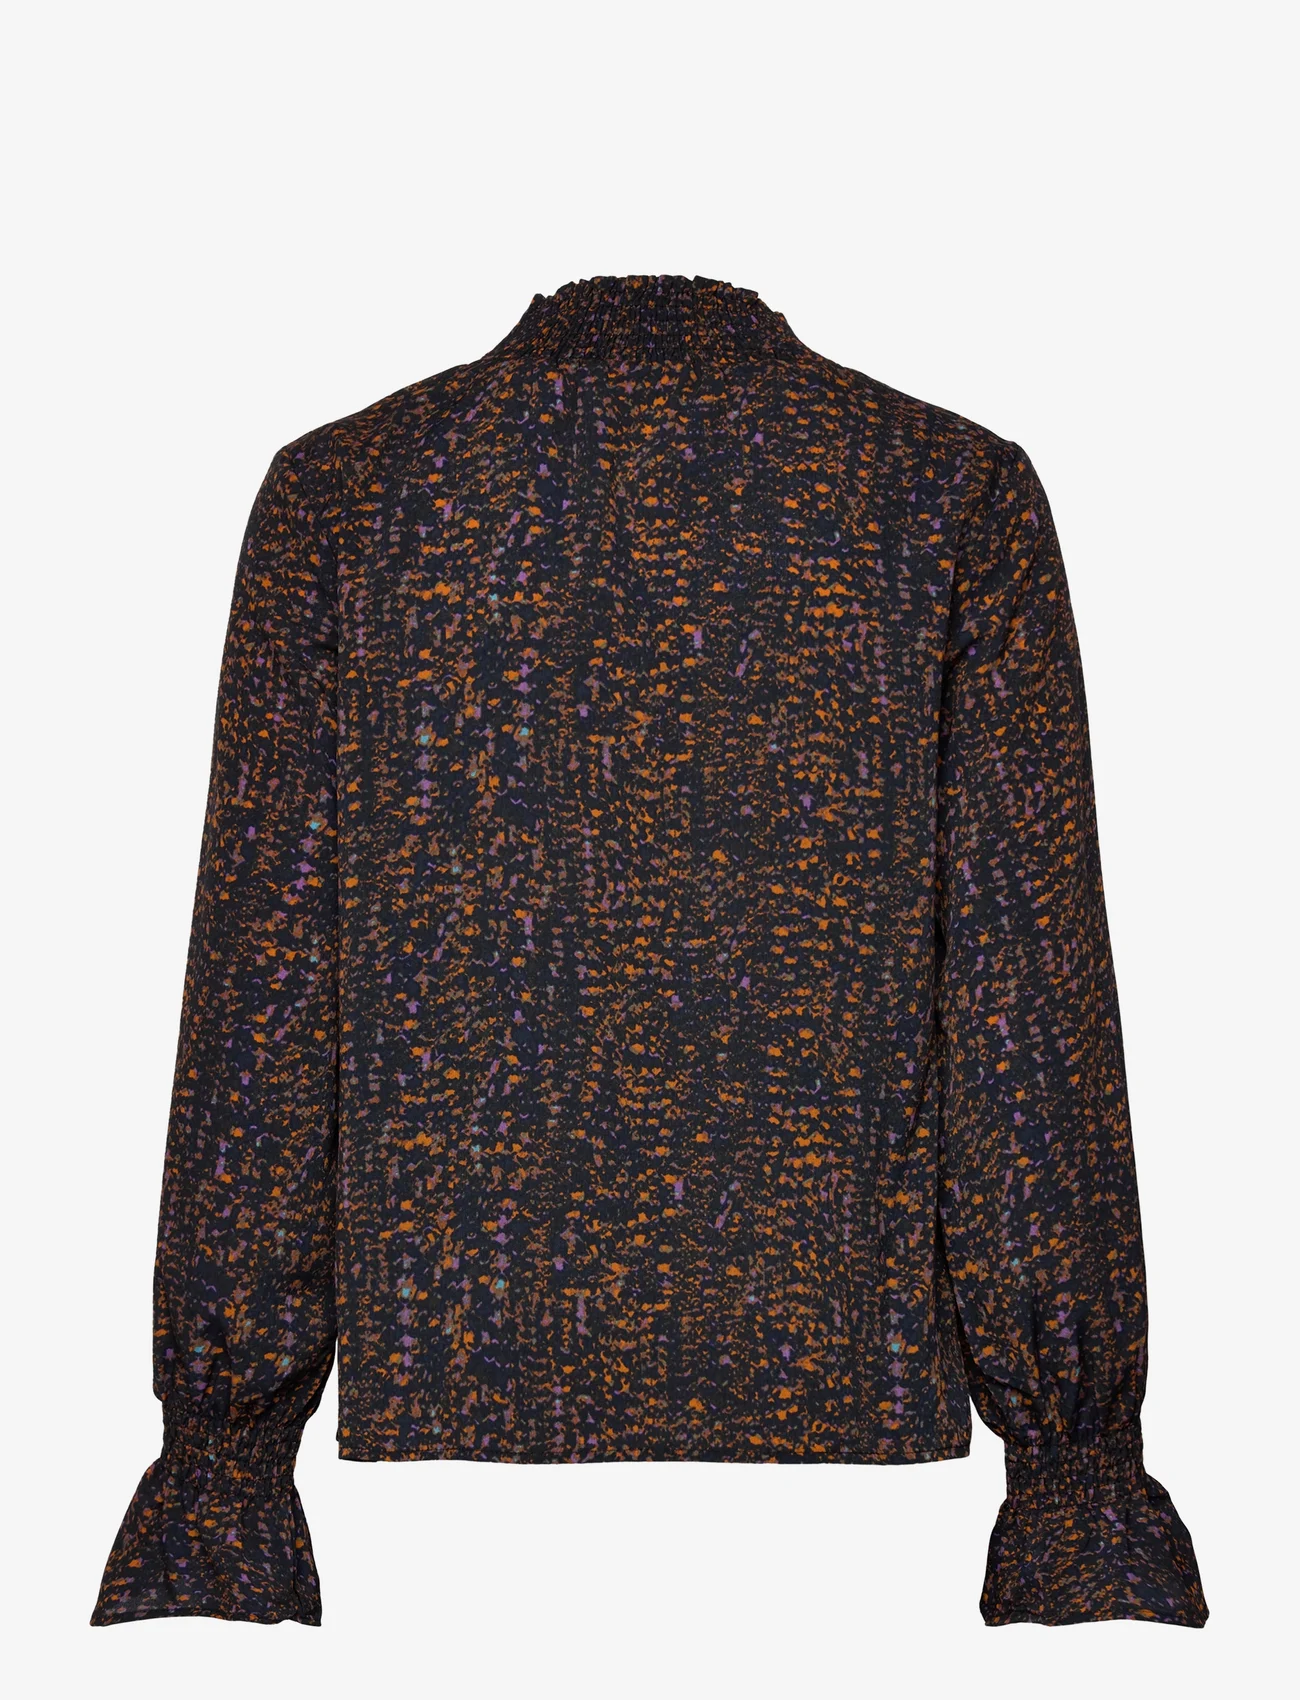 Coster Copenhagen - Smock blouse - blūzes ar garām piedurknēm - splash print black - 1